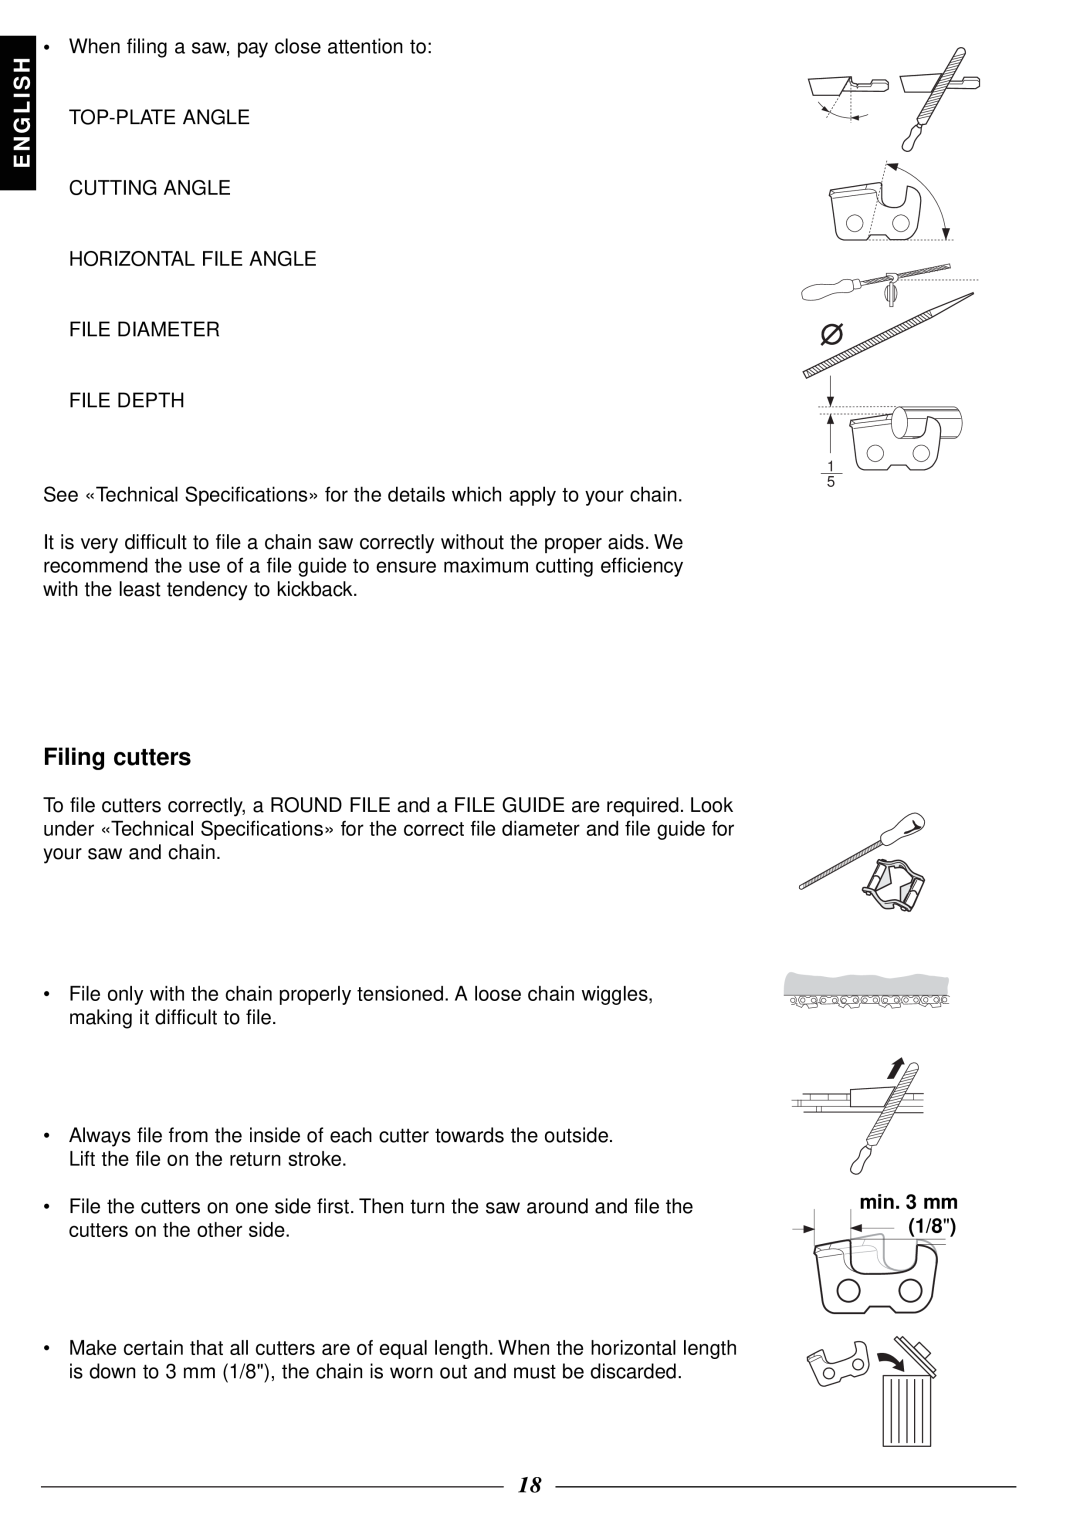 Husqvarna 315, 318 manual Filing cutters, E N G L I S H, min. 3 mm 1/8 